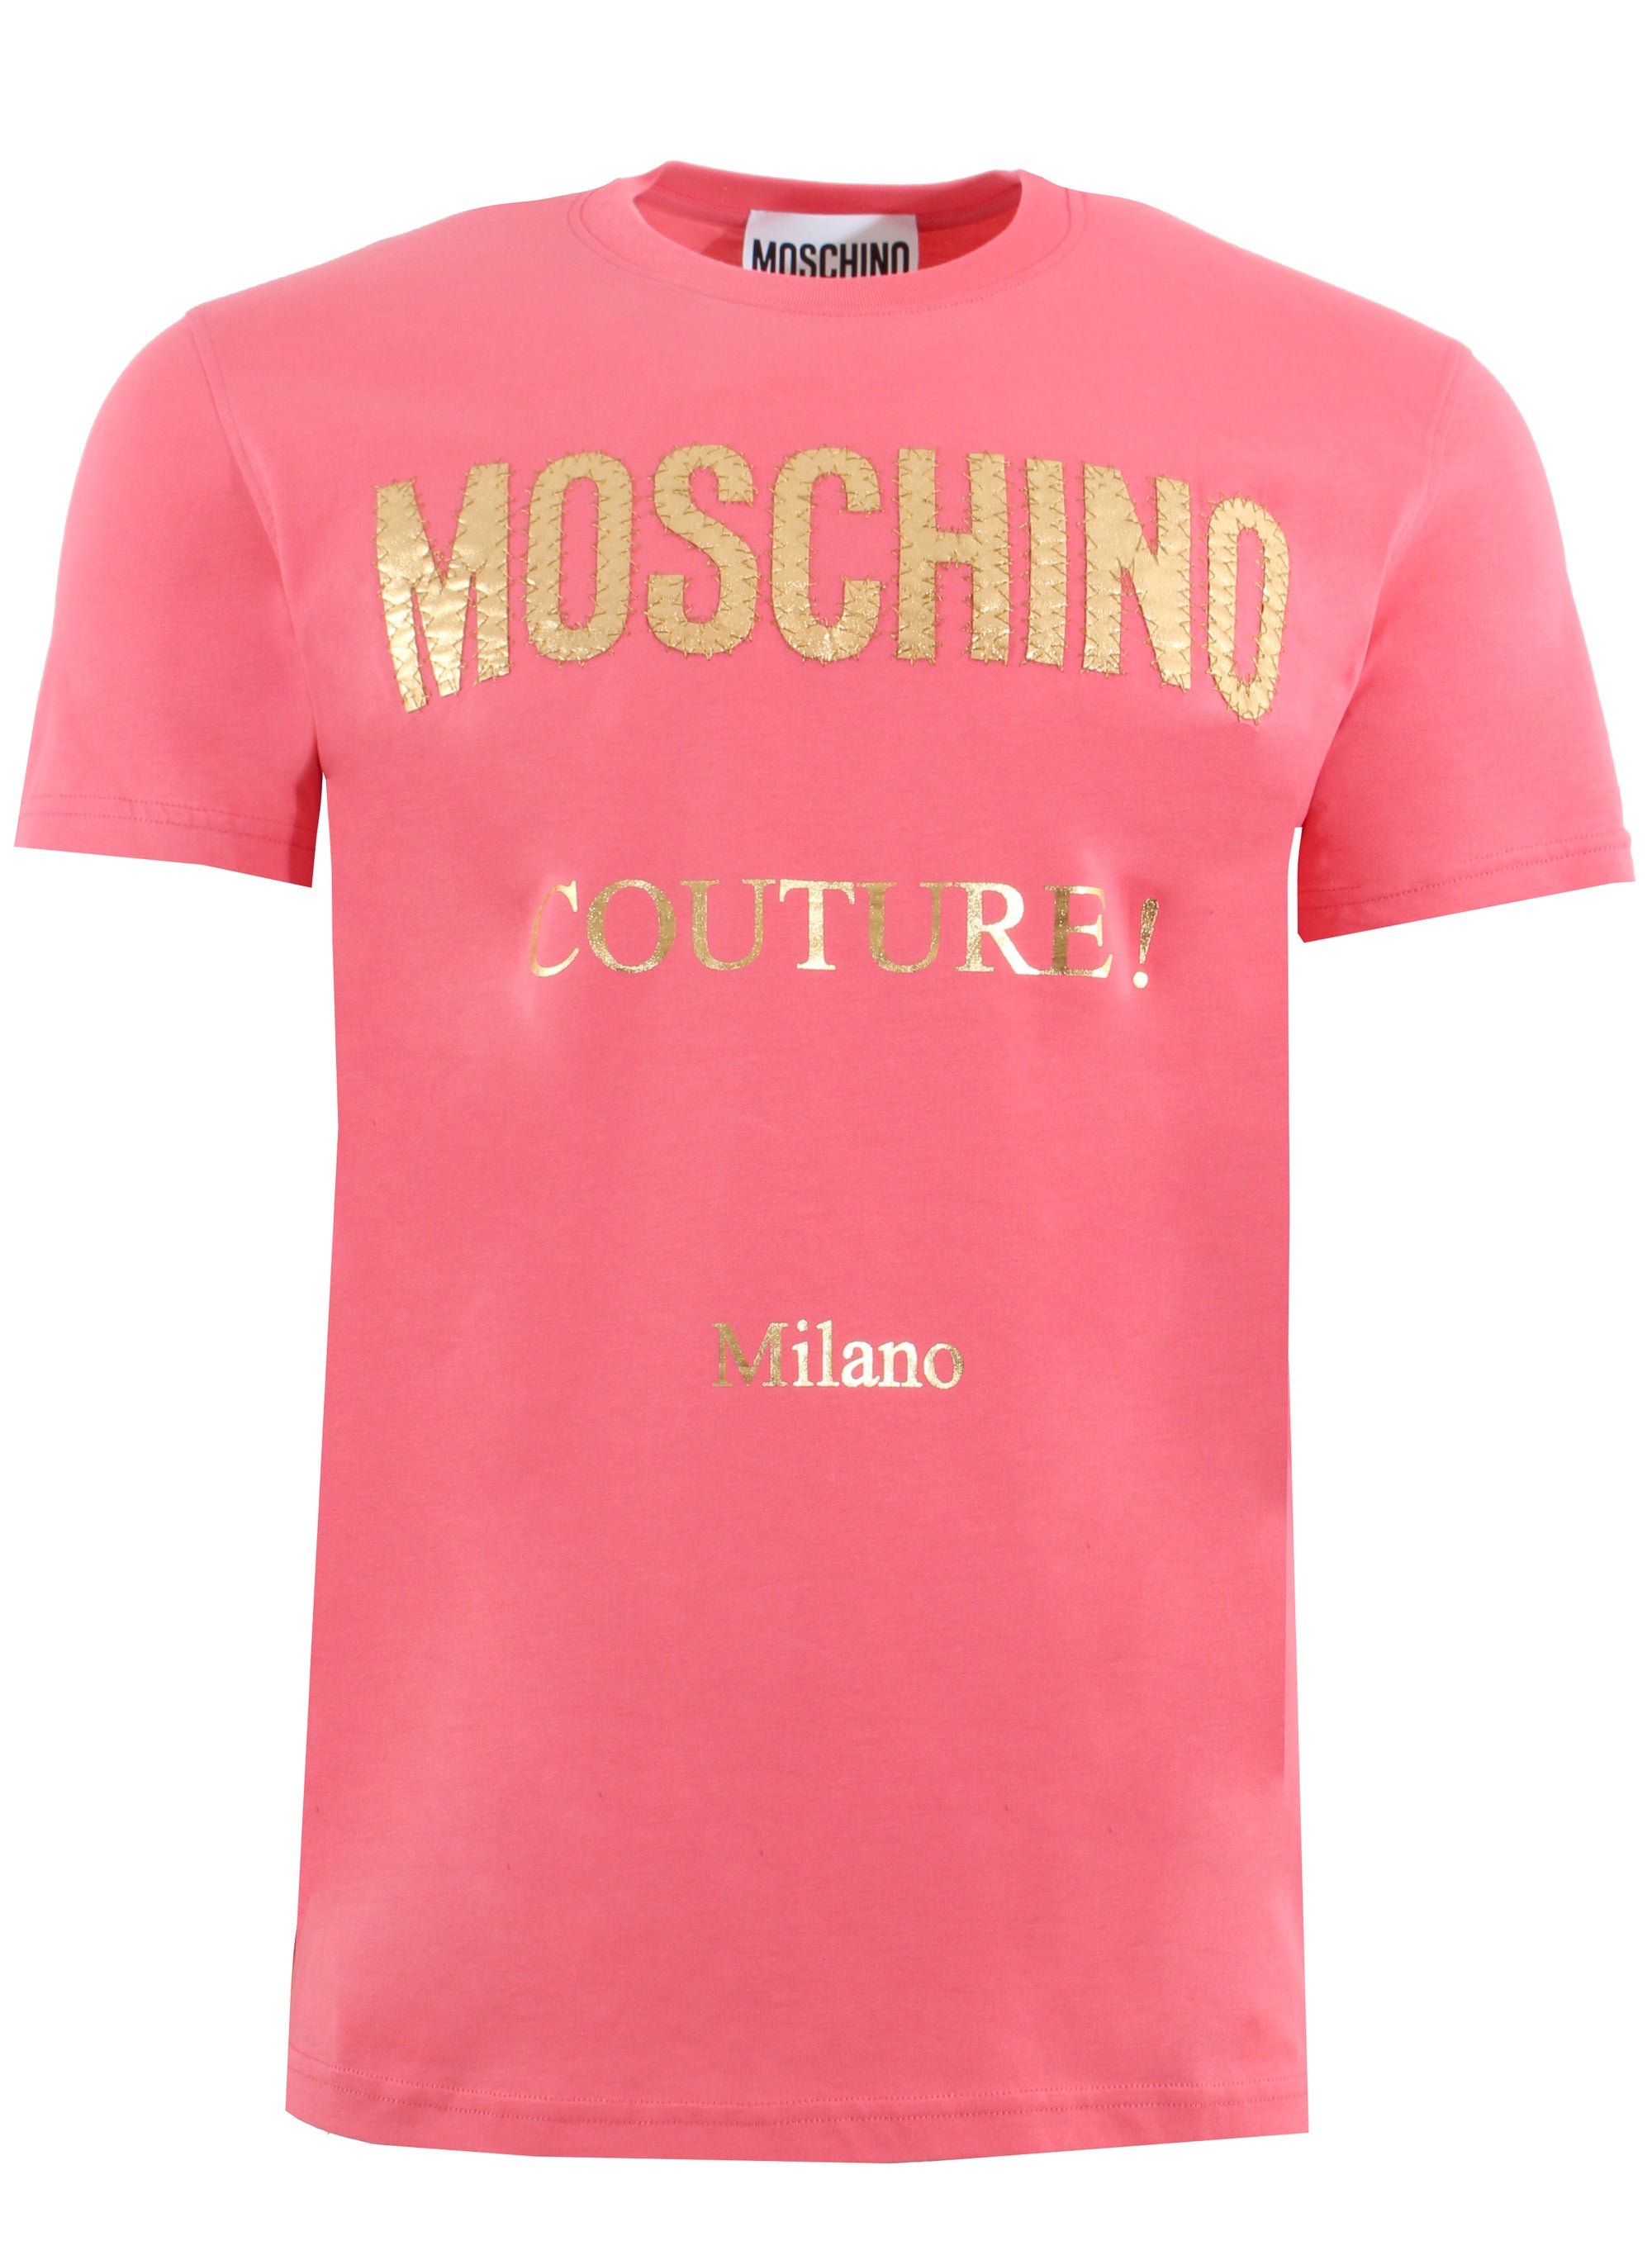 Moschino Couture Logo Tee - Pink